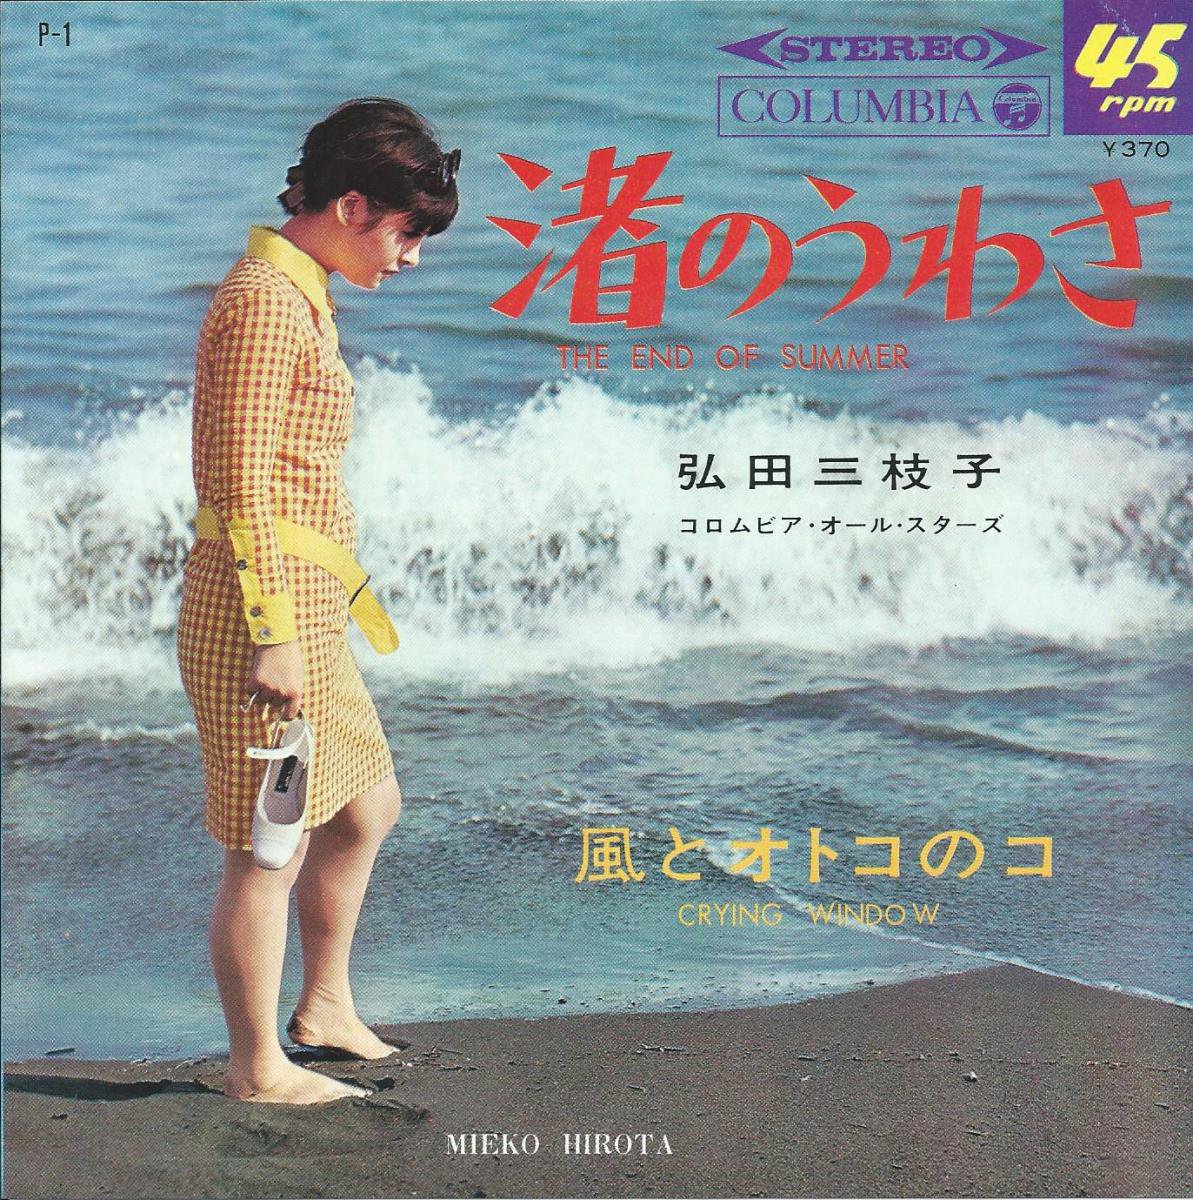 Ļ޻ MIEKO HIROTA / Τ蘆 THE END OF SUMMER (7